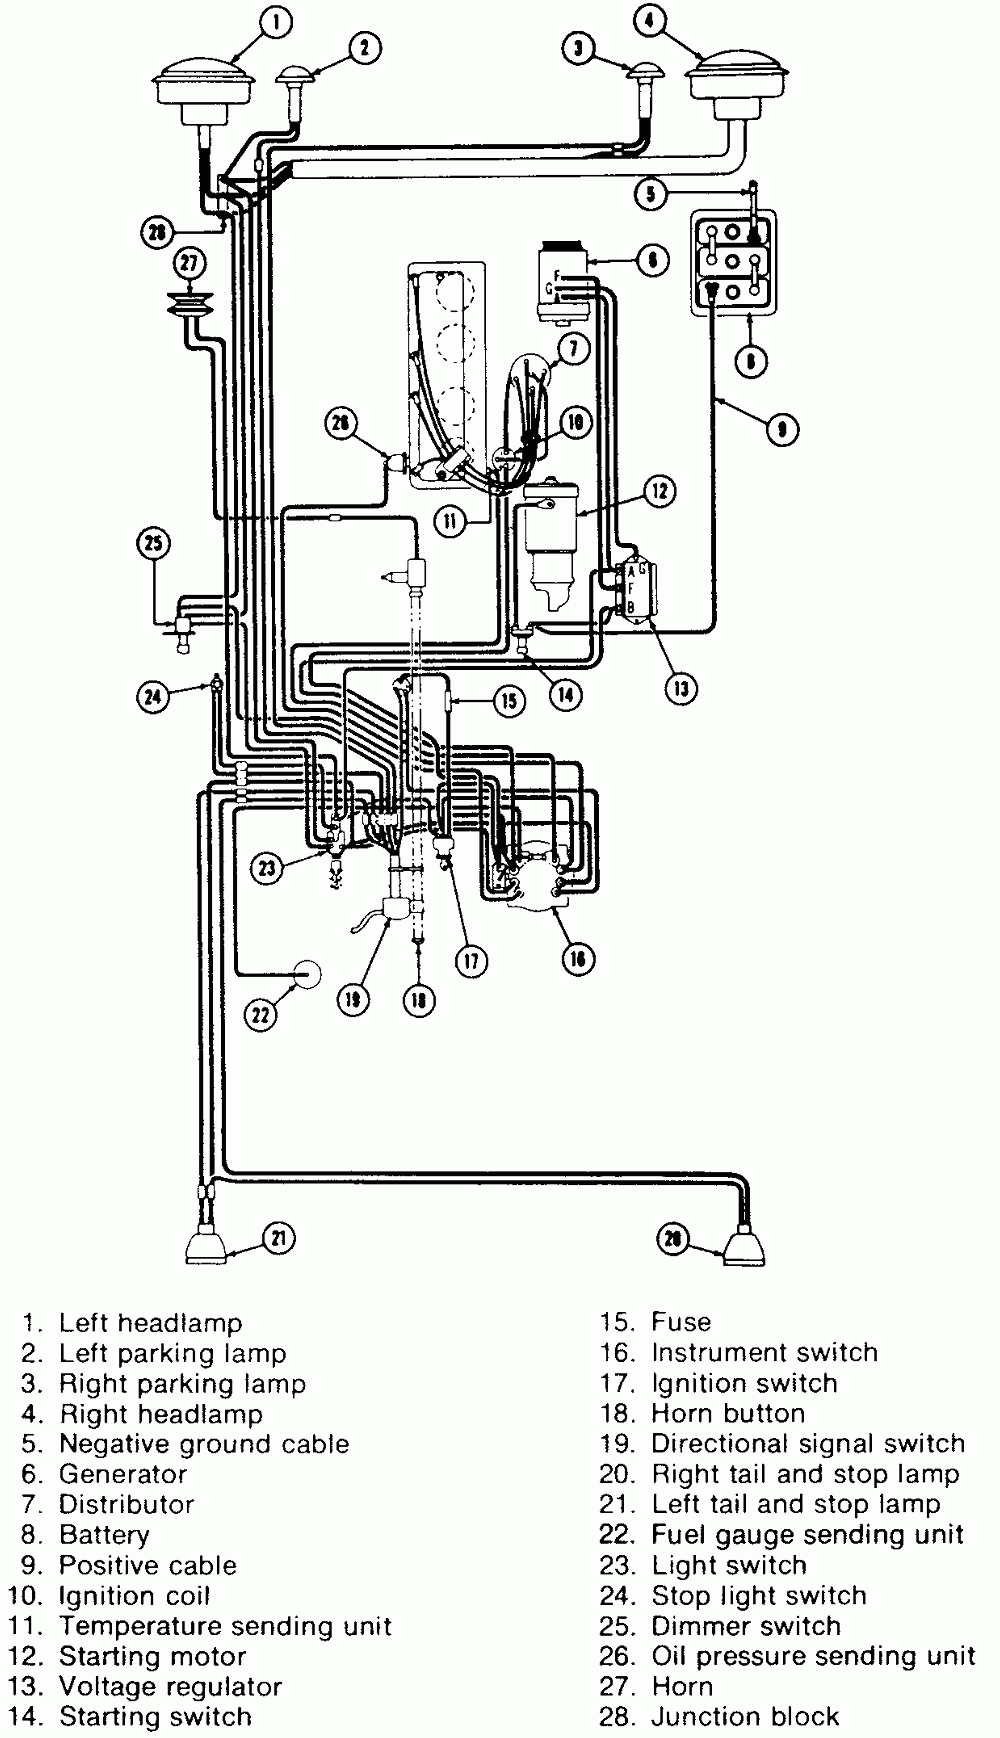 6 Volt Positive Ground Wiring Diagram Fuel Tank | Wiring Diagram - 6 Volt Positive Ground Wiring Diagram